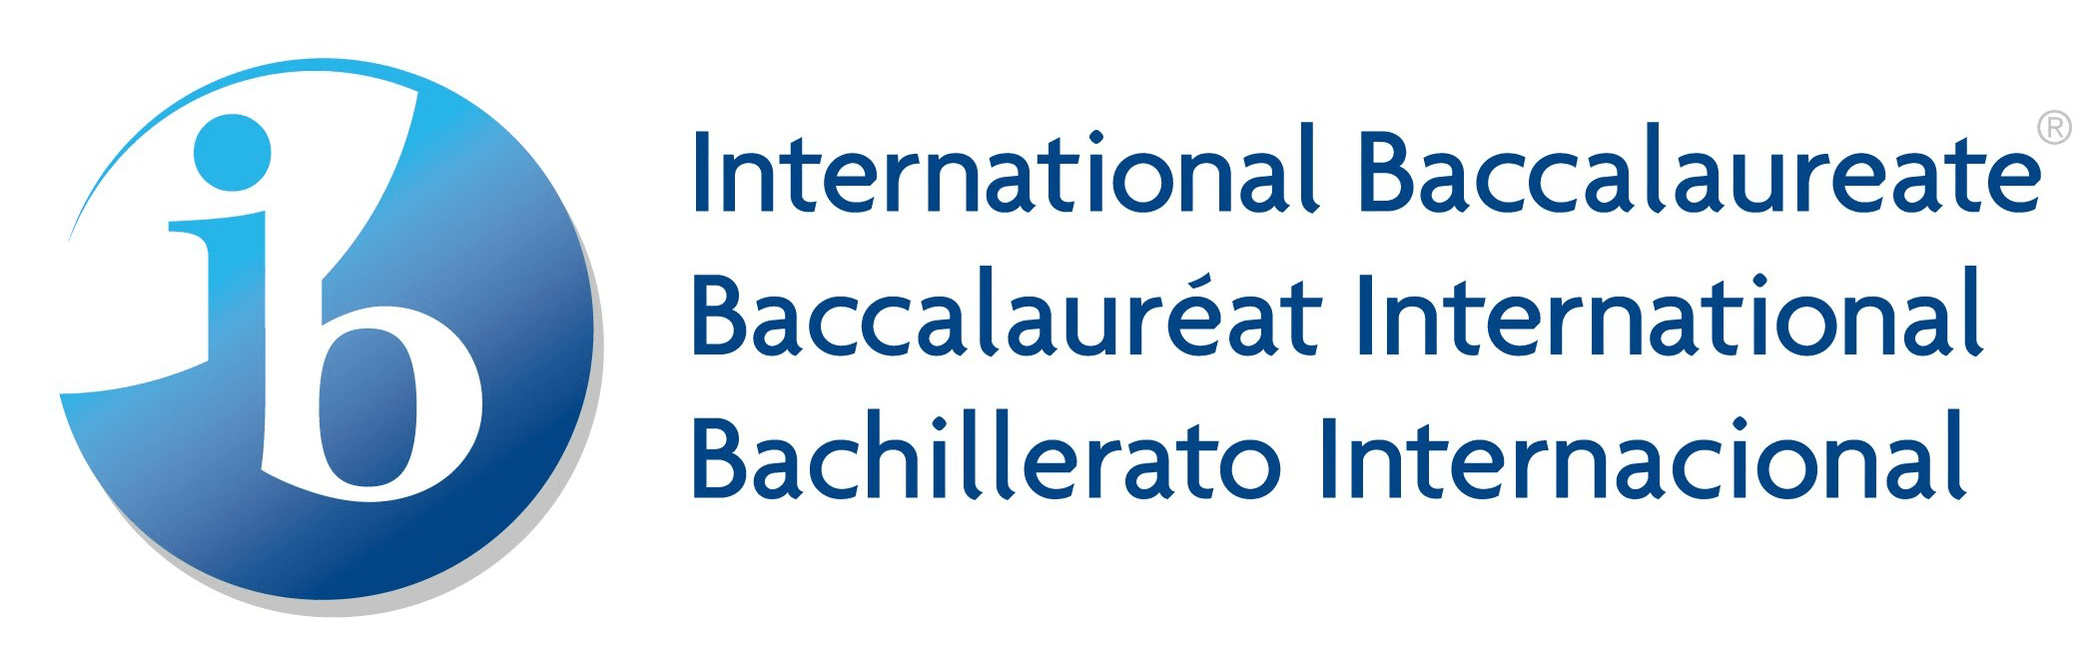 boston school international baccalaureate